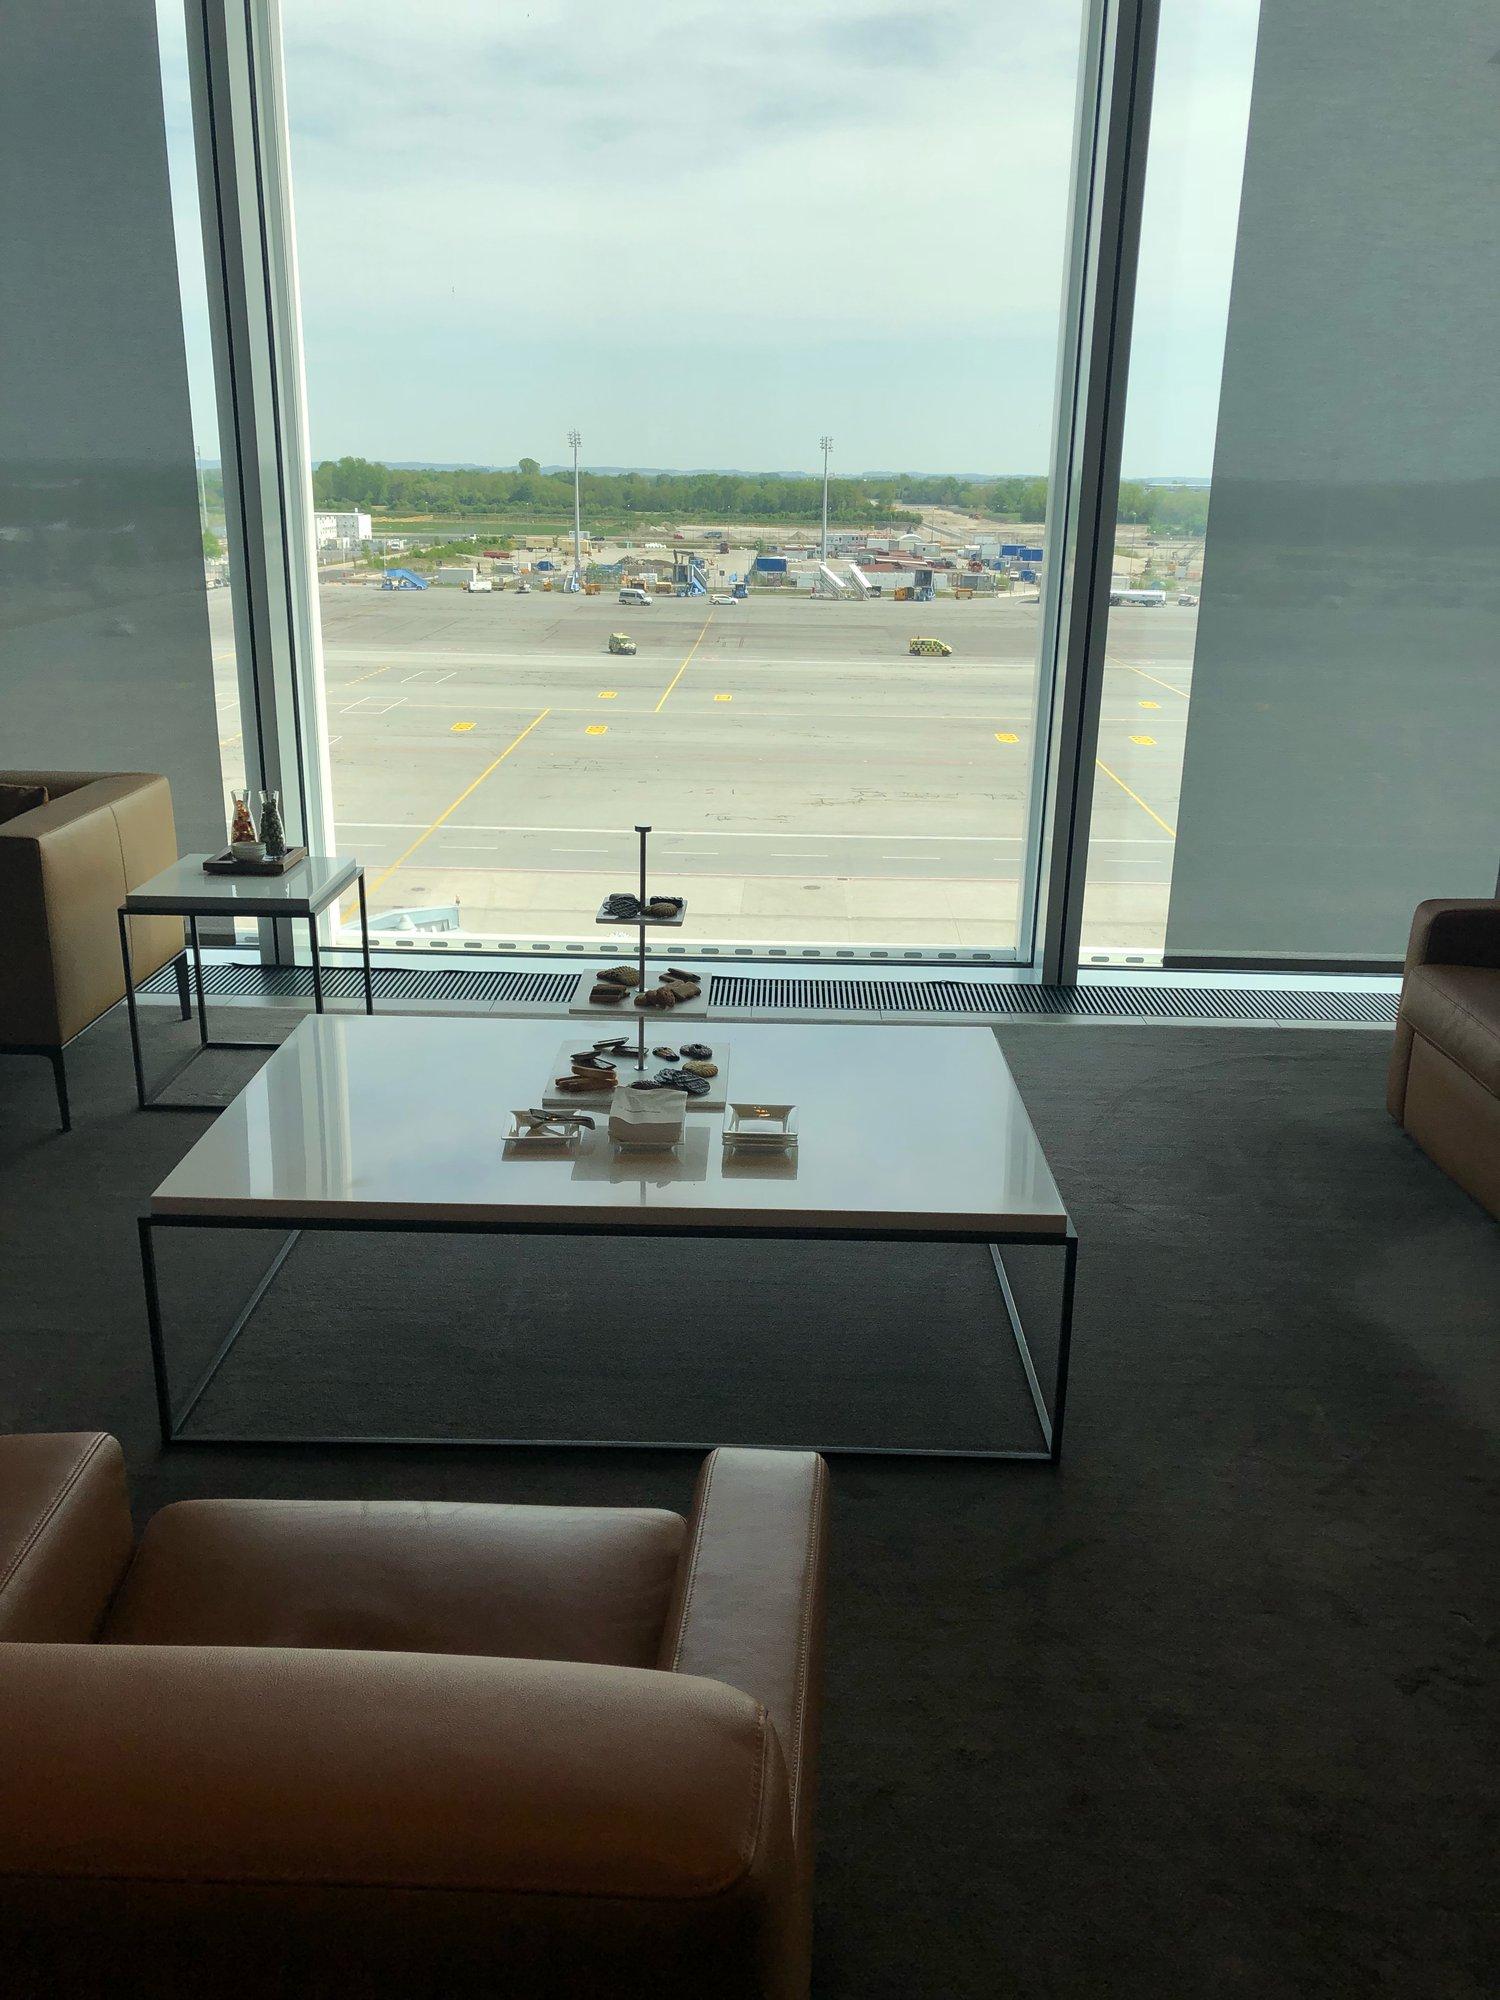 Lufthansa First Class Lounge image 9 of 41